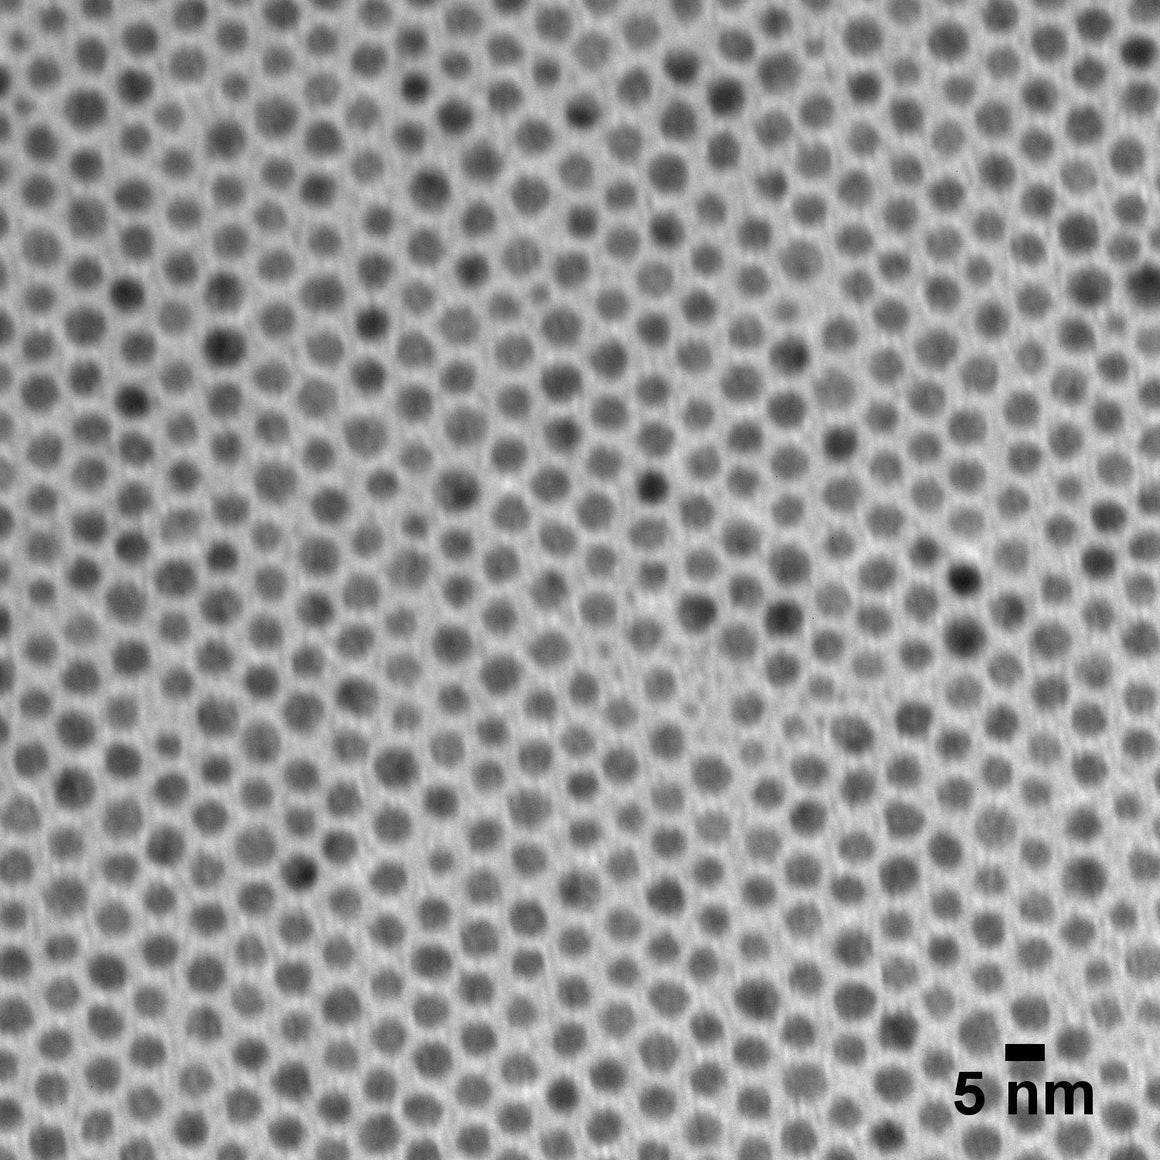 NanoXact Gold Nanospheres – Dodecanethiol (Dried)